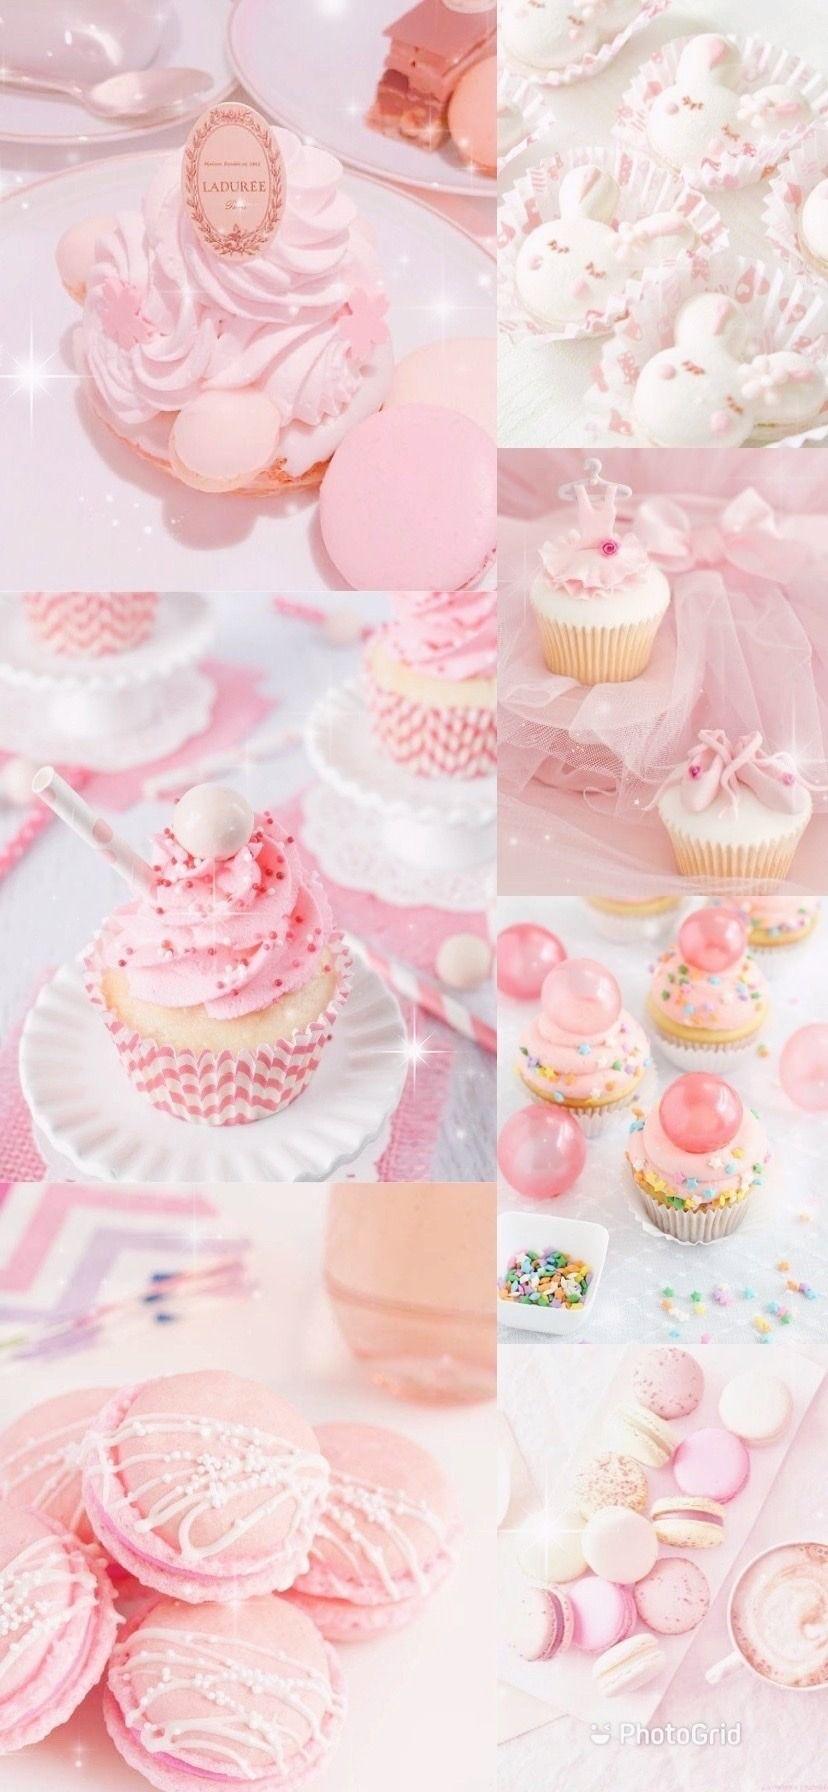 Pastel Cupcake Wallpapers - Top Free Pastel Cupcake Backgrounds ...